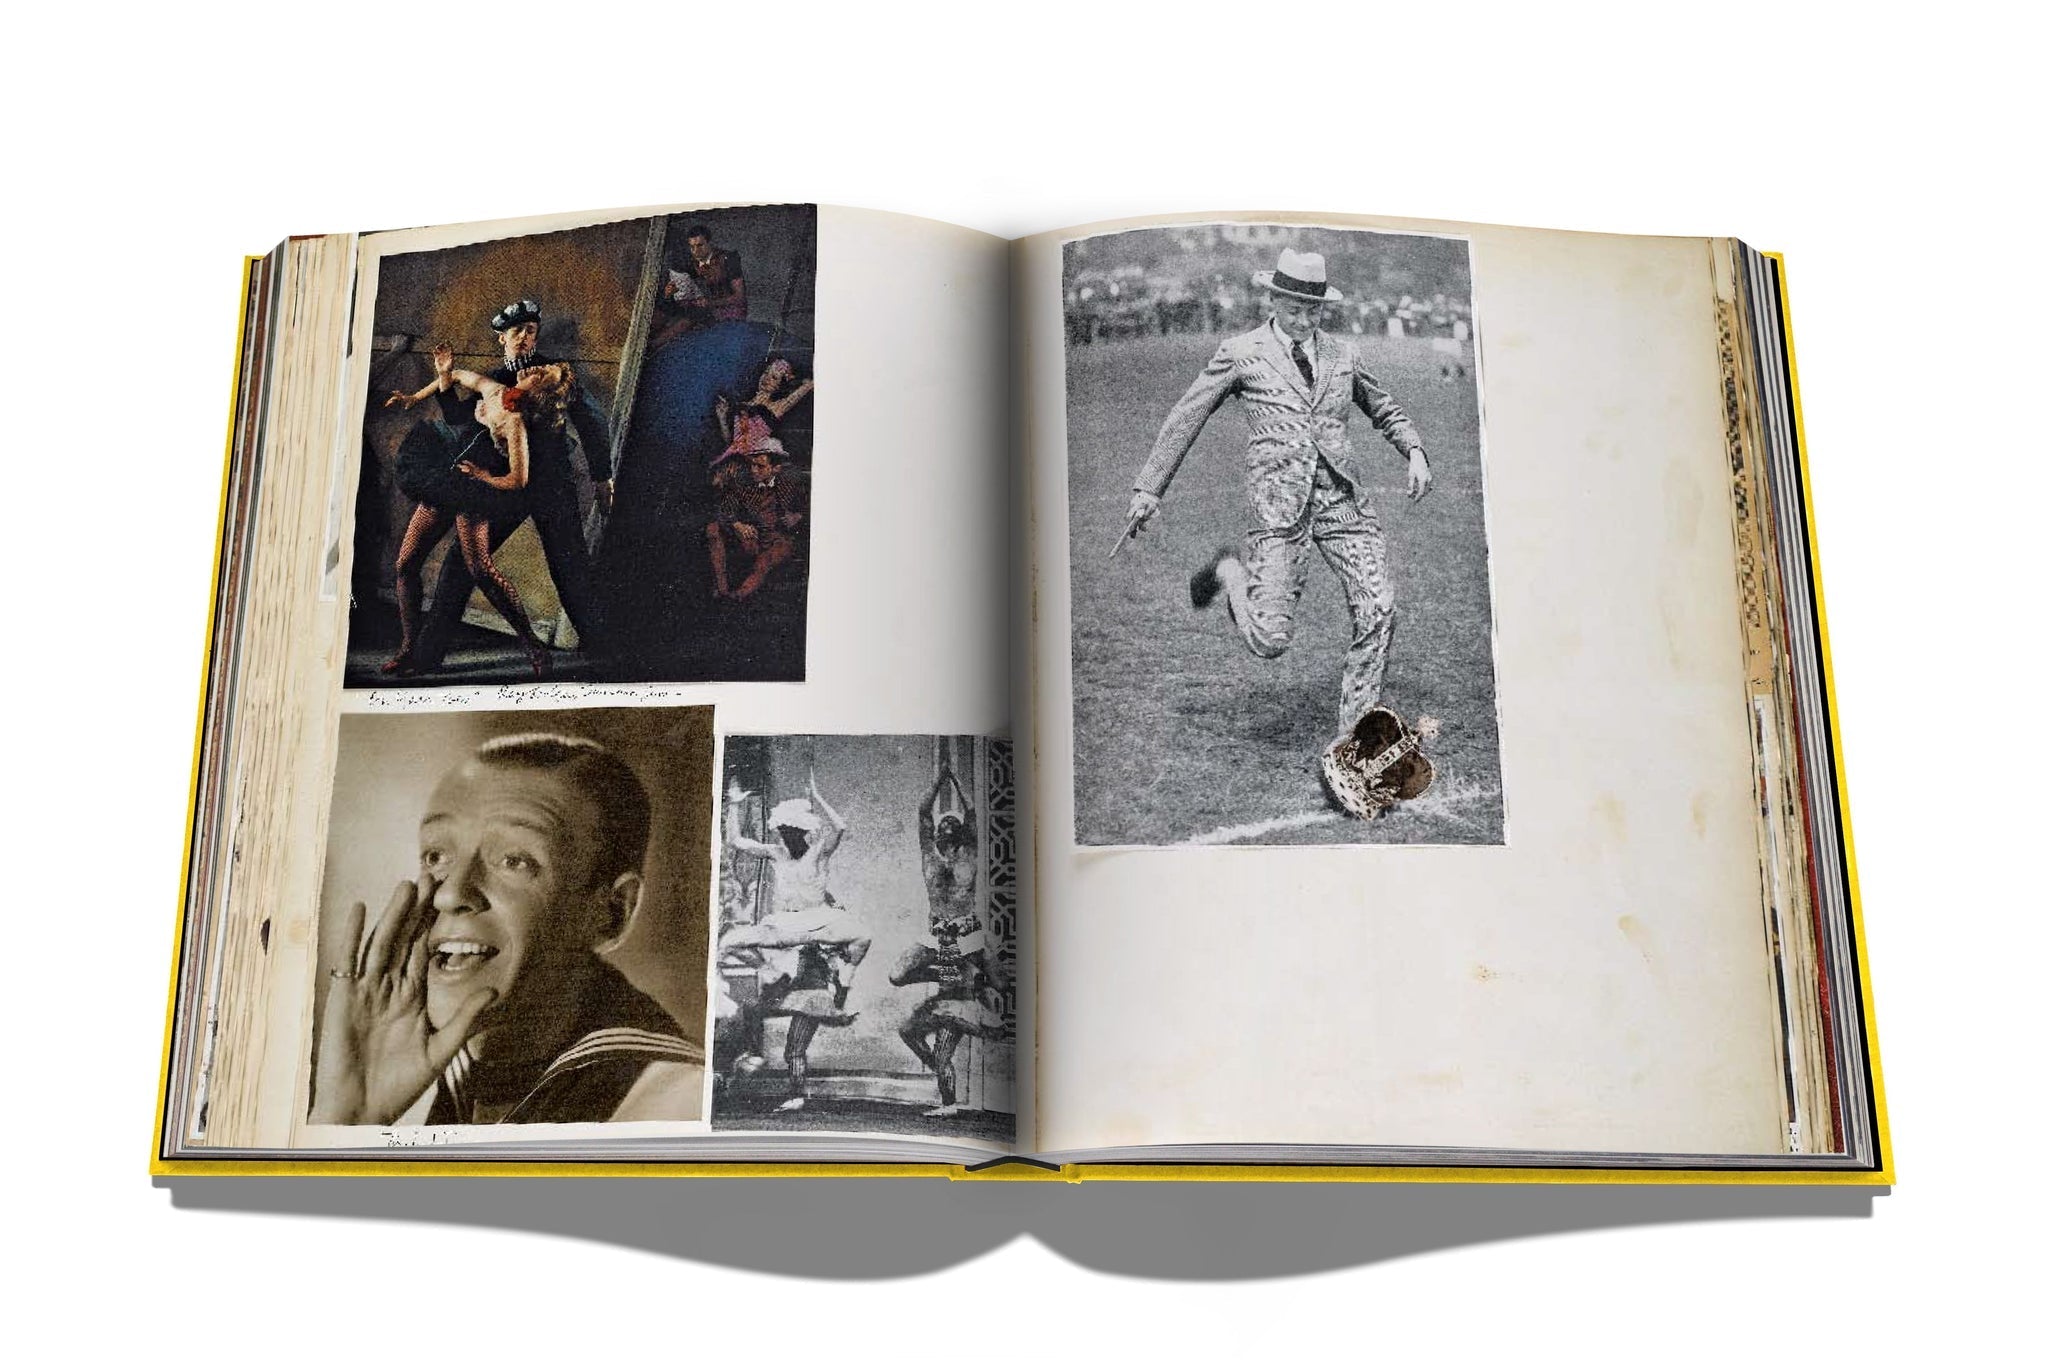 Assouline Cecil Beaton: l'art du Scrapbook